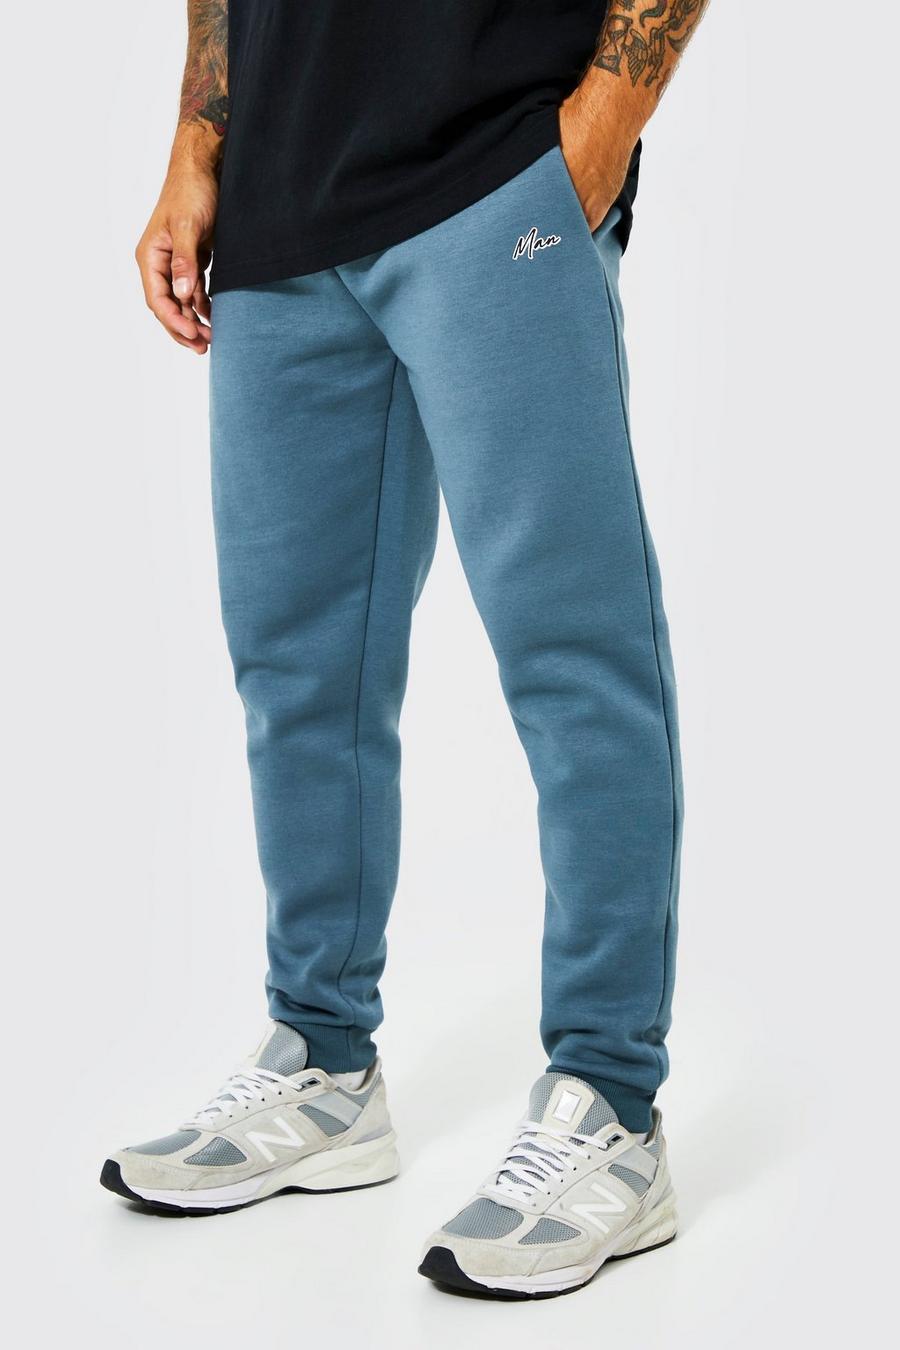 Pantalón deportivo MAN Regular, Slate blue azzurro